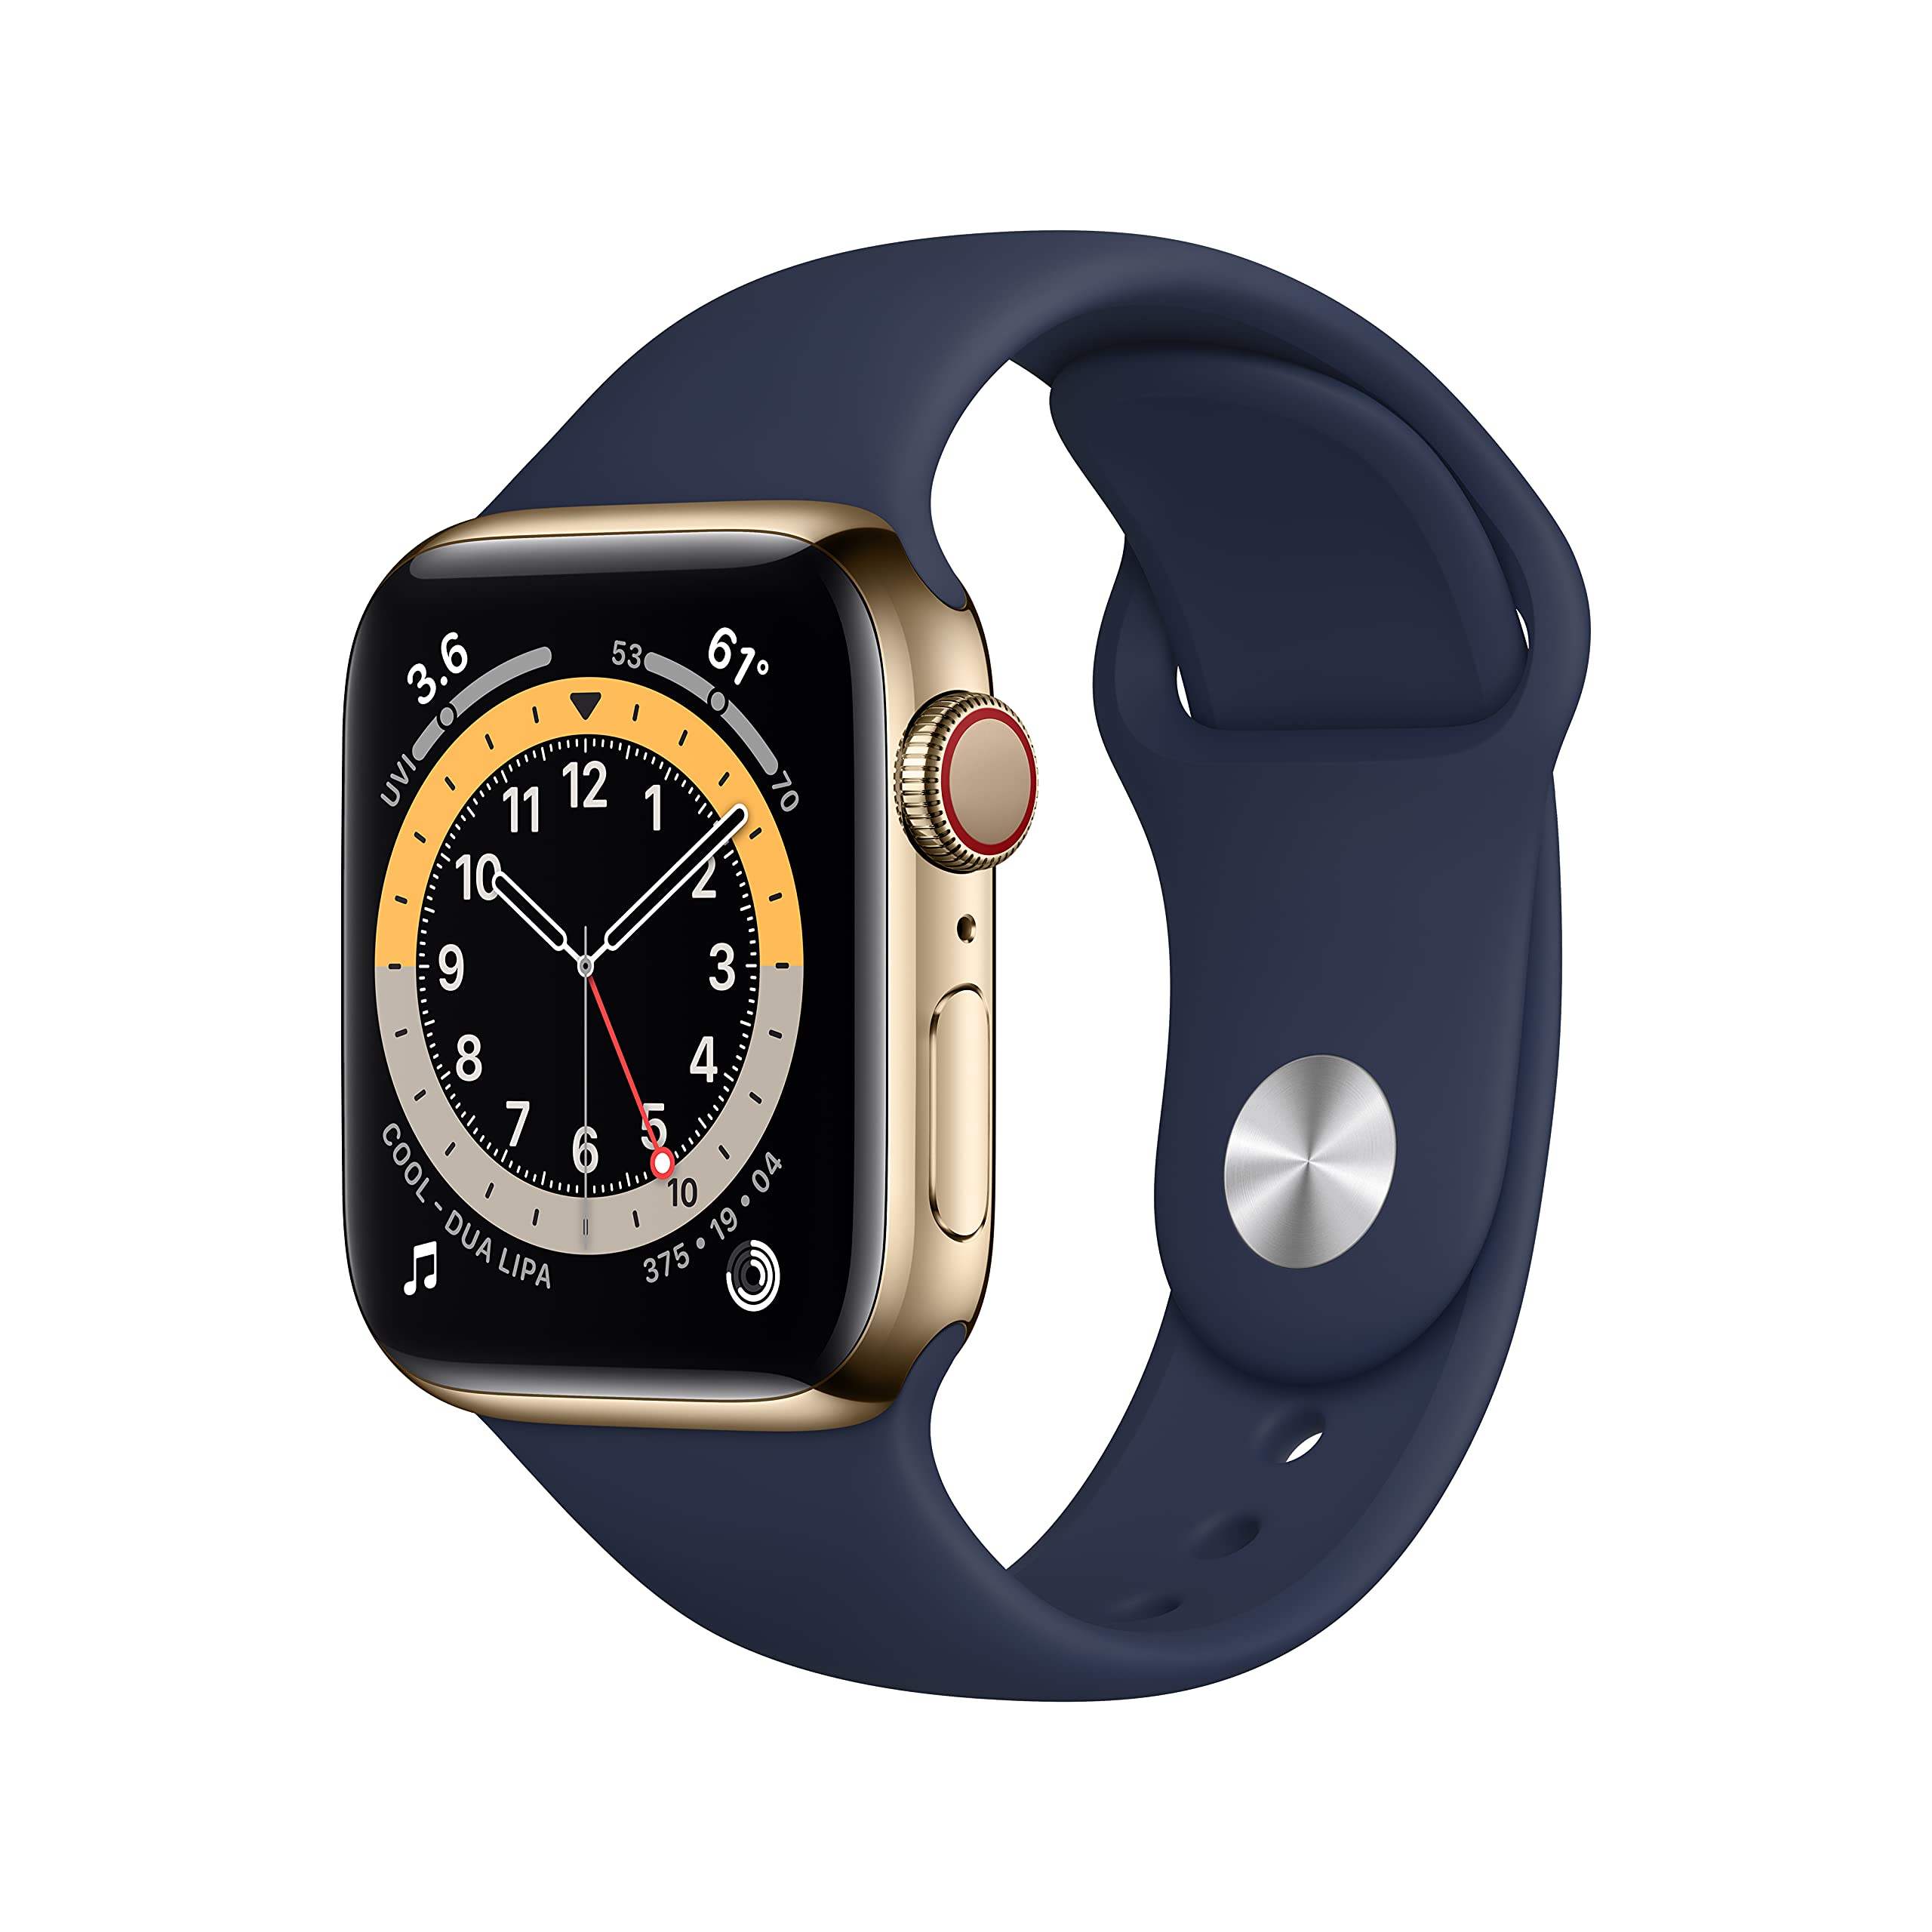 Apple Watch Series 6 (GPS + Cellular, 40 mm) – Goldfarbenes Edelstahlgehäuse mit tiefem marineblauen Sportarmband. (Generalüberholt)